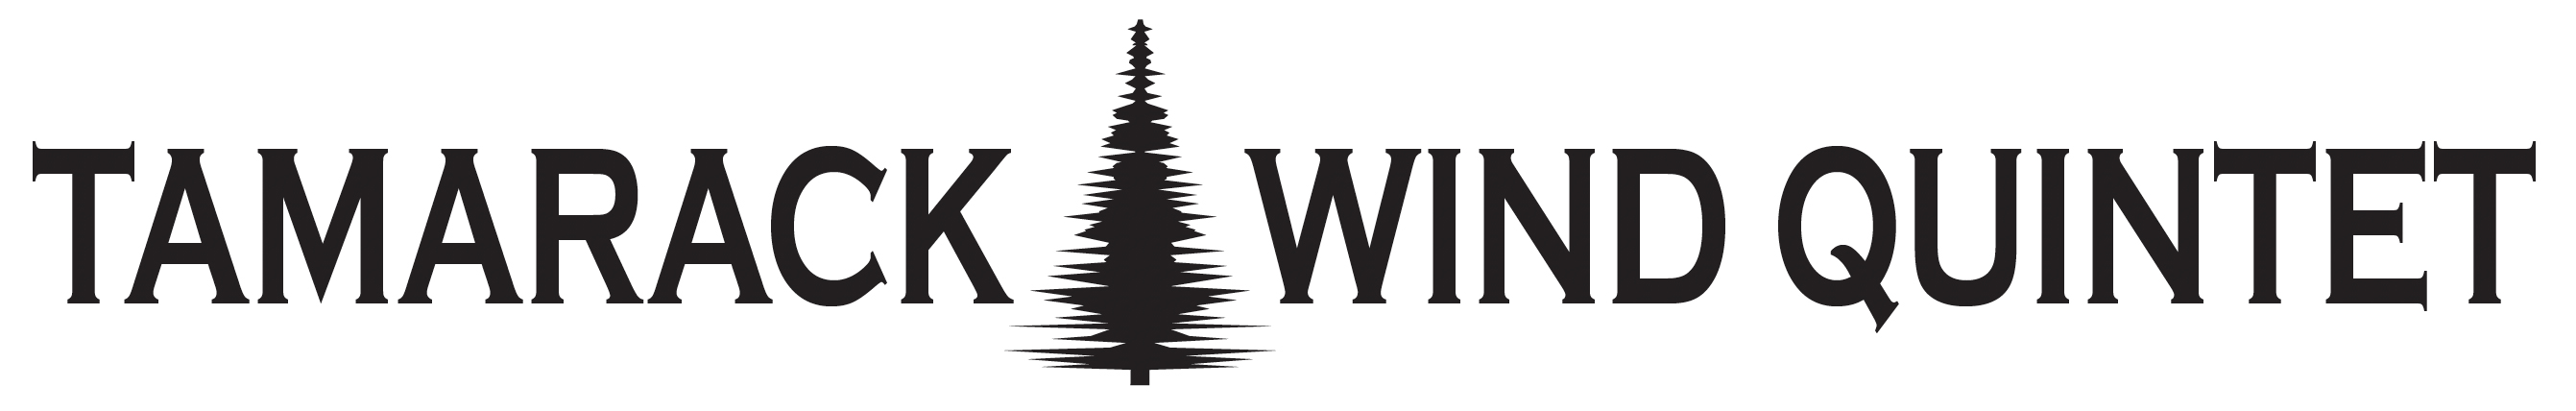 tamarack wind quartet logo